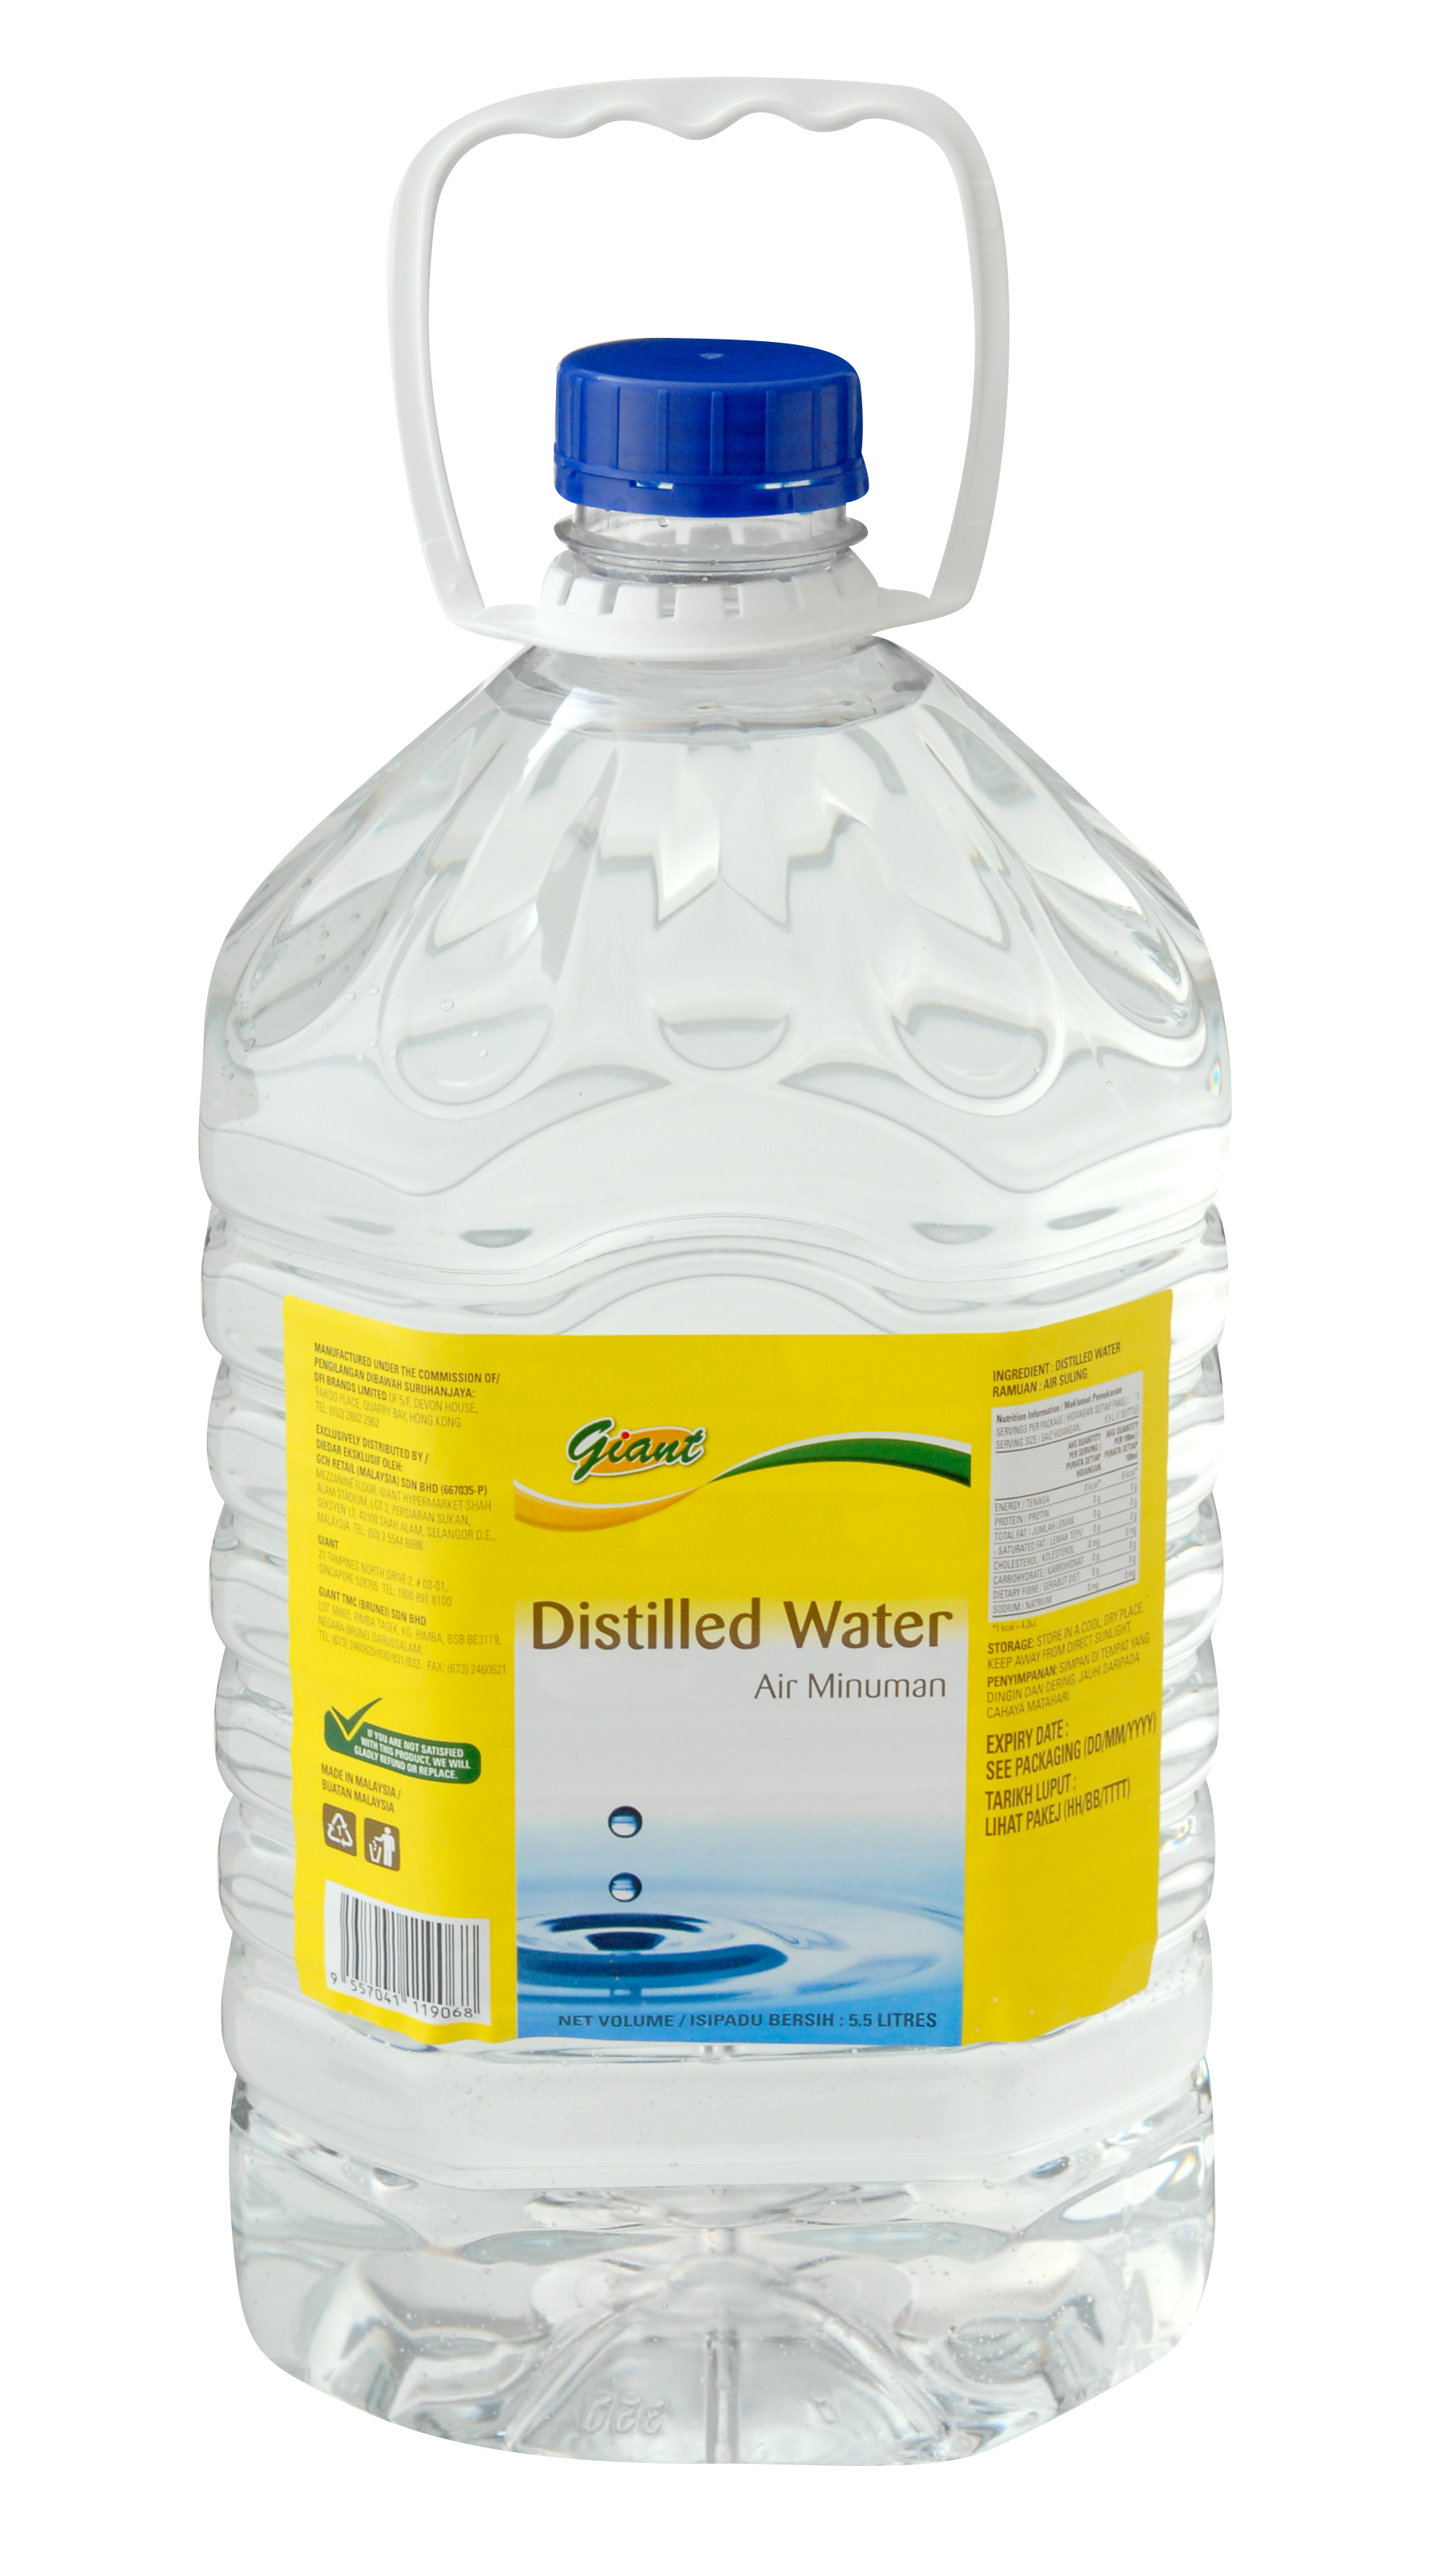 HDB home improvement distilled water